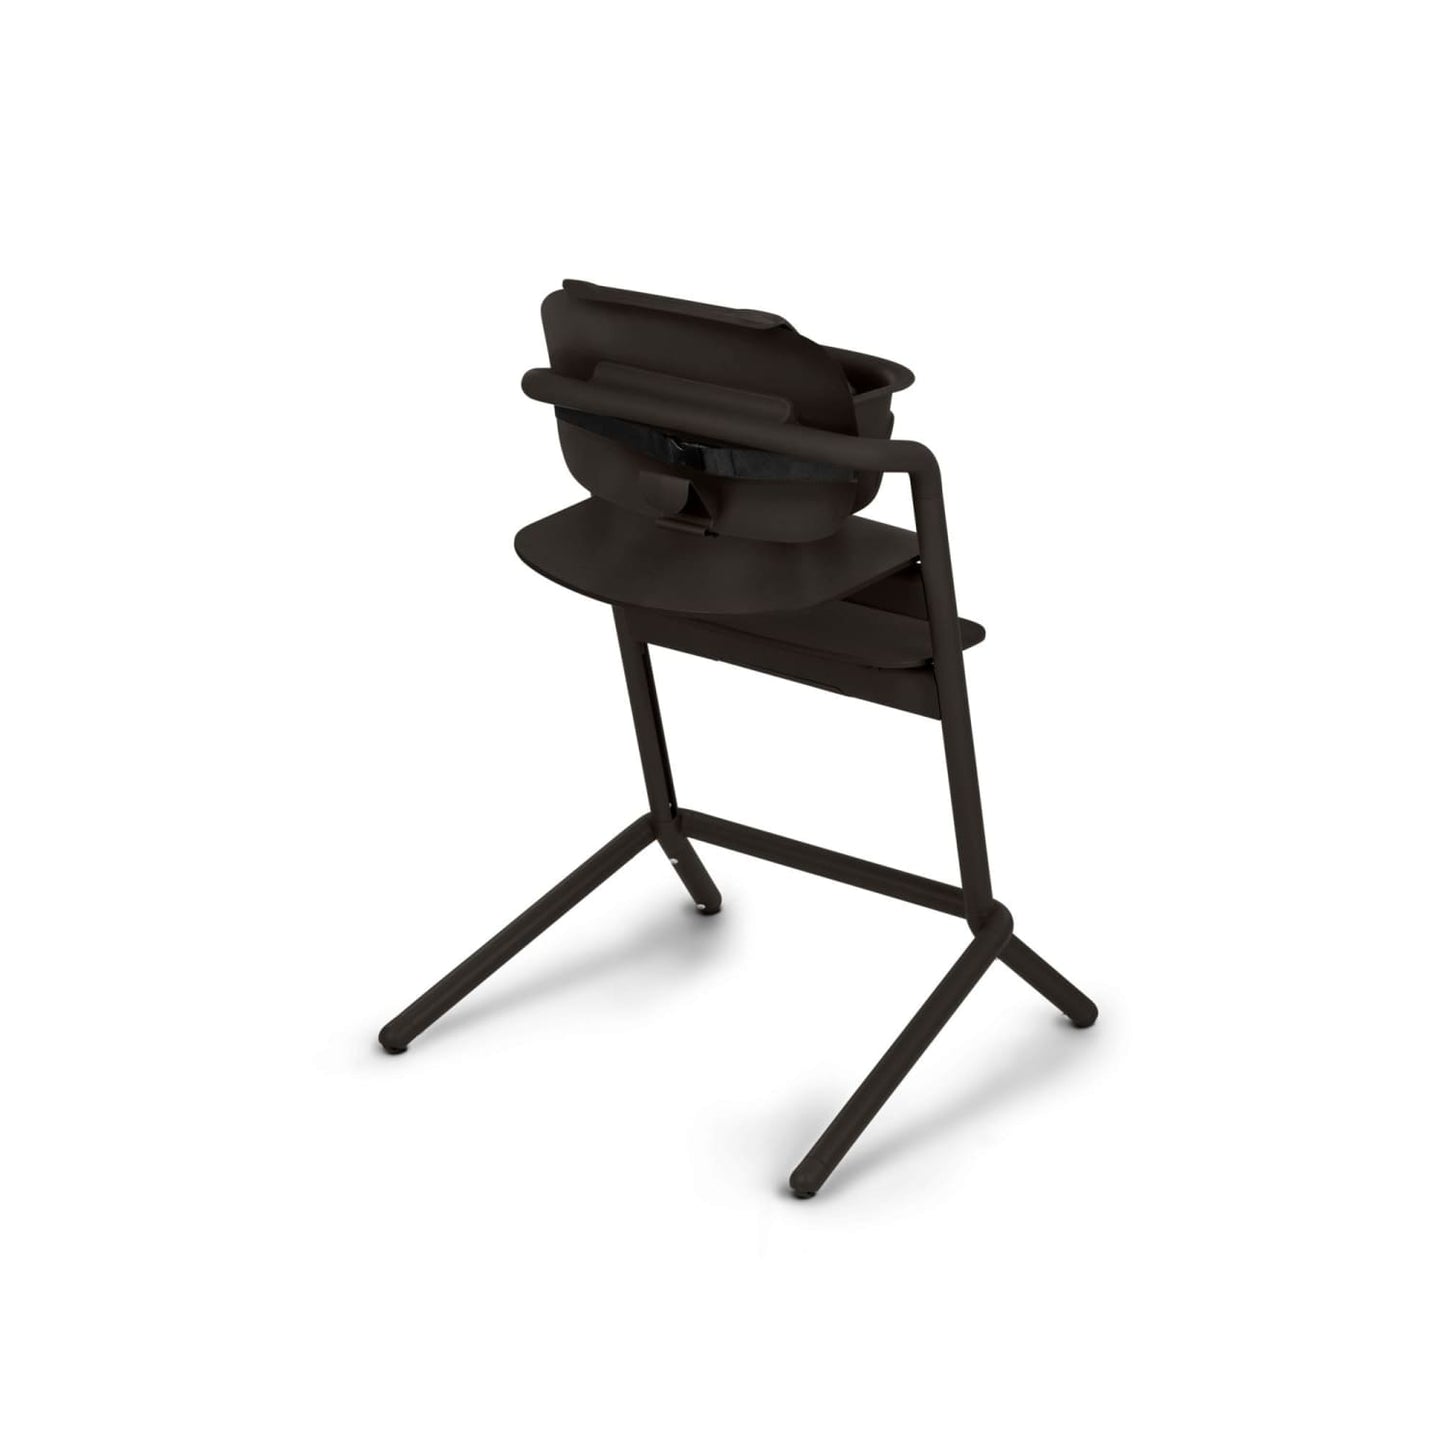 CYBEX Lemo Baby High Chair - Infinity Black - High Chair